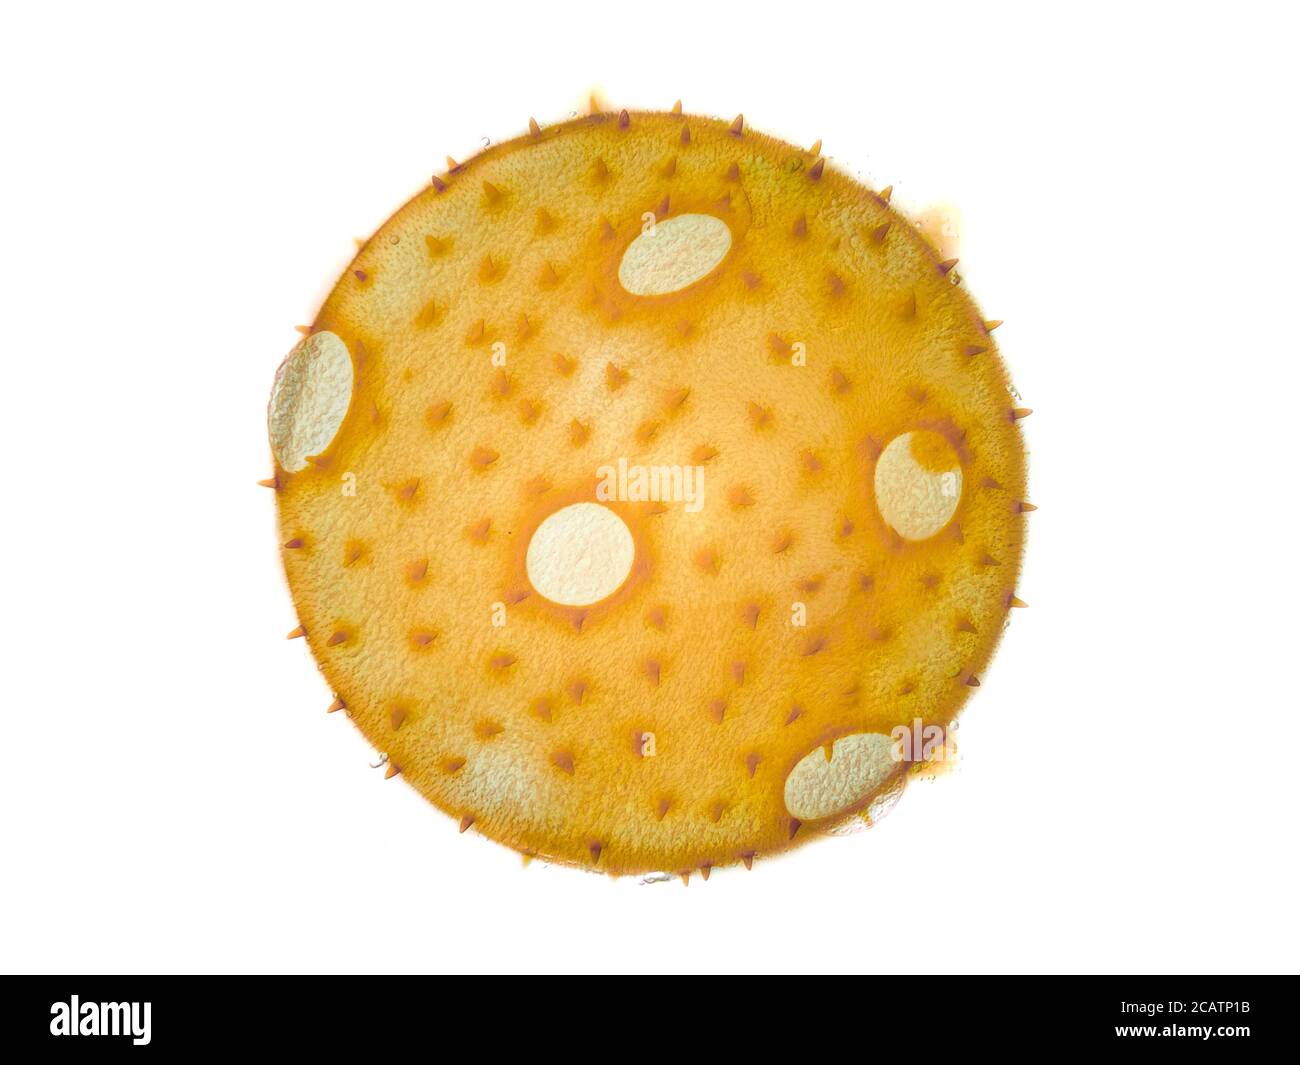 Summer squash (Cucurbita pepo) pollen grain (about 220 micrometers in diameter) under the microscope Stock Photo